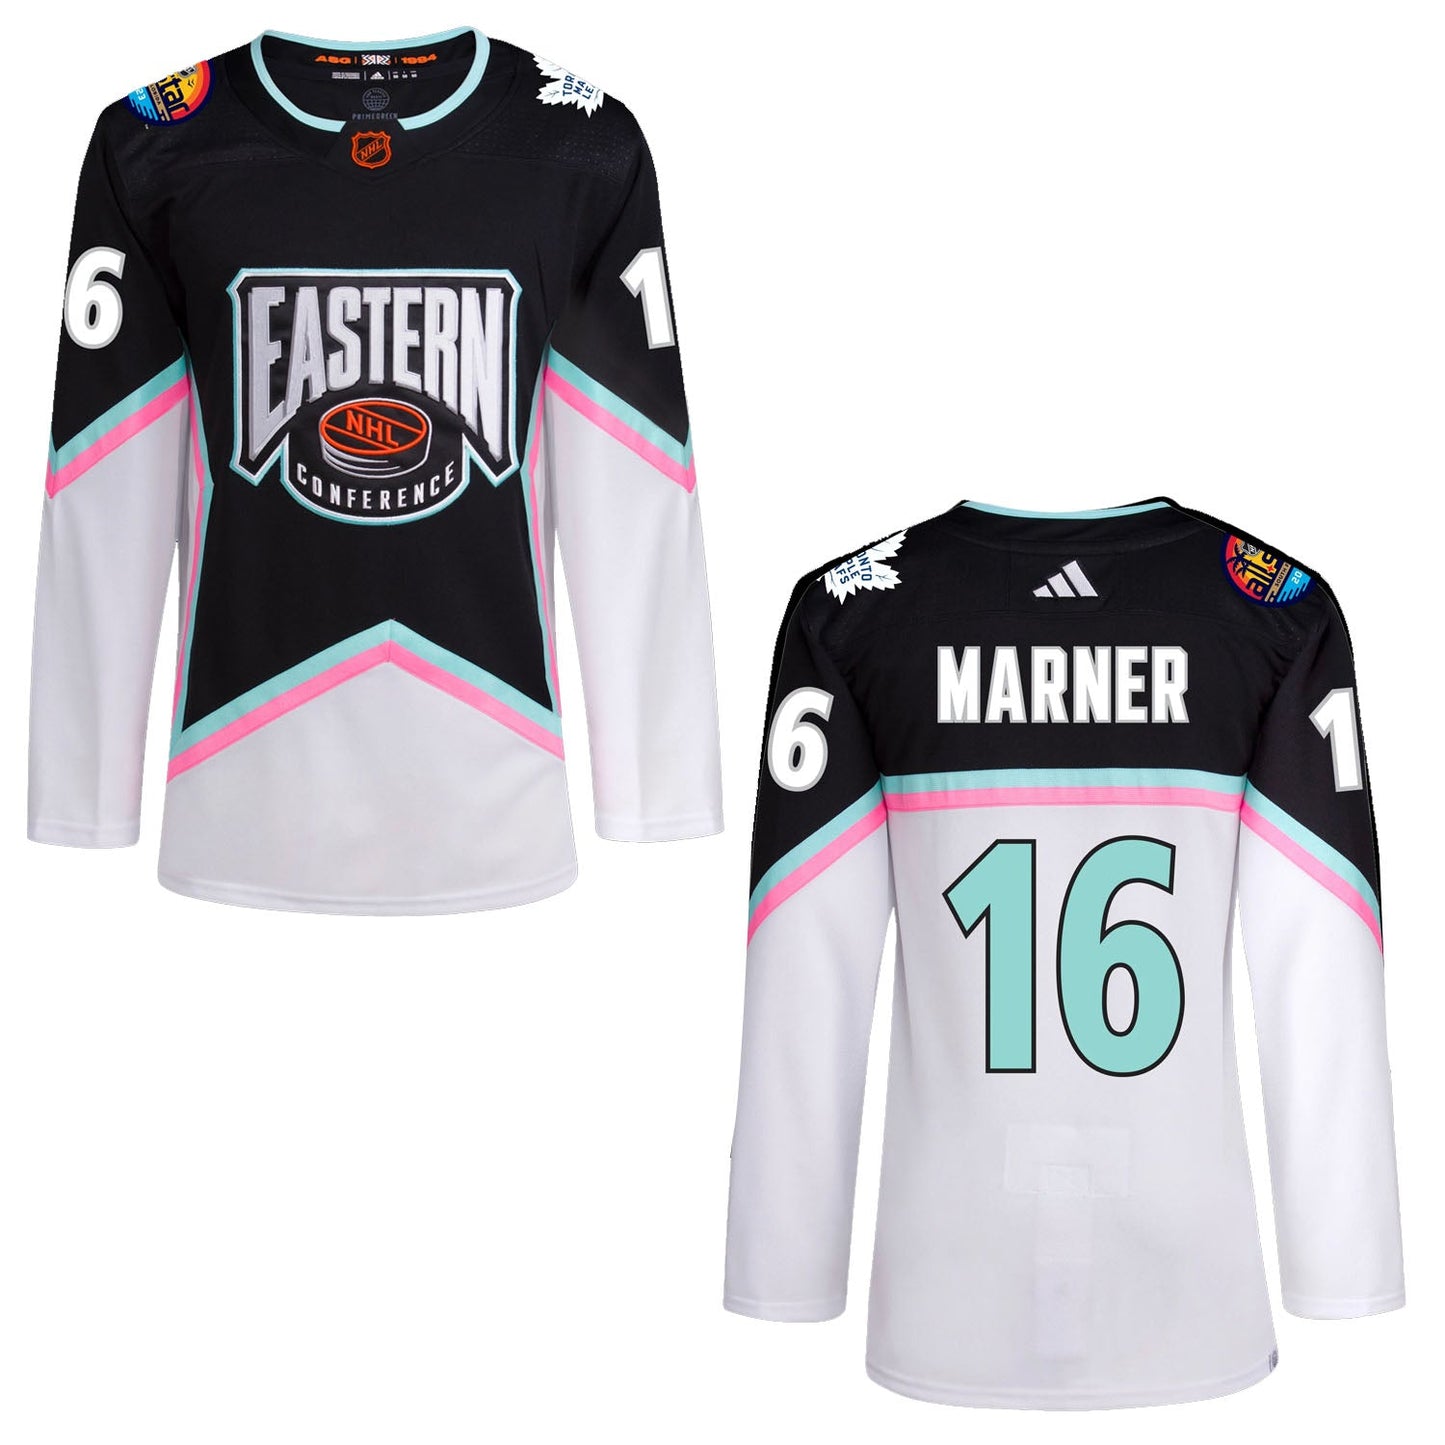 NHL Mitch Marner Eastern All Star 16 Jersey